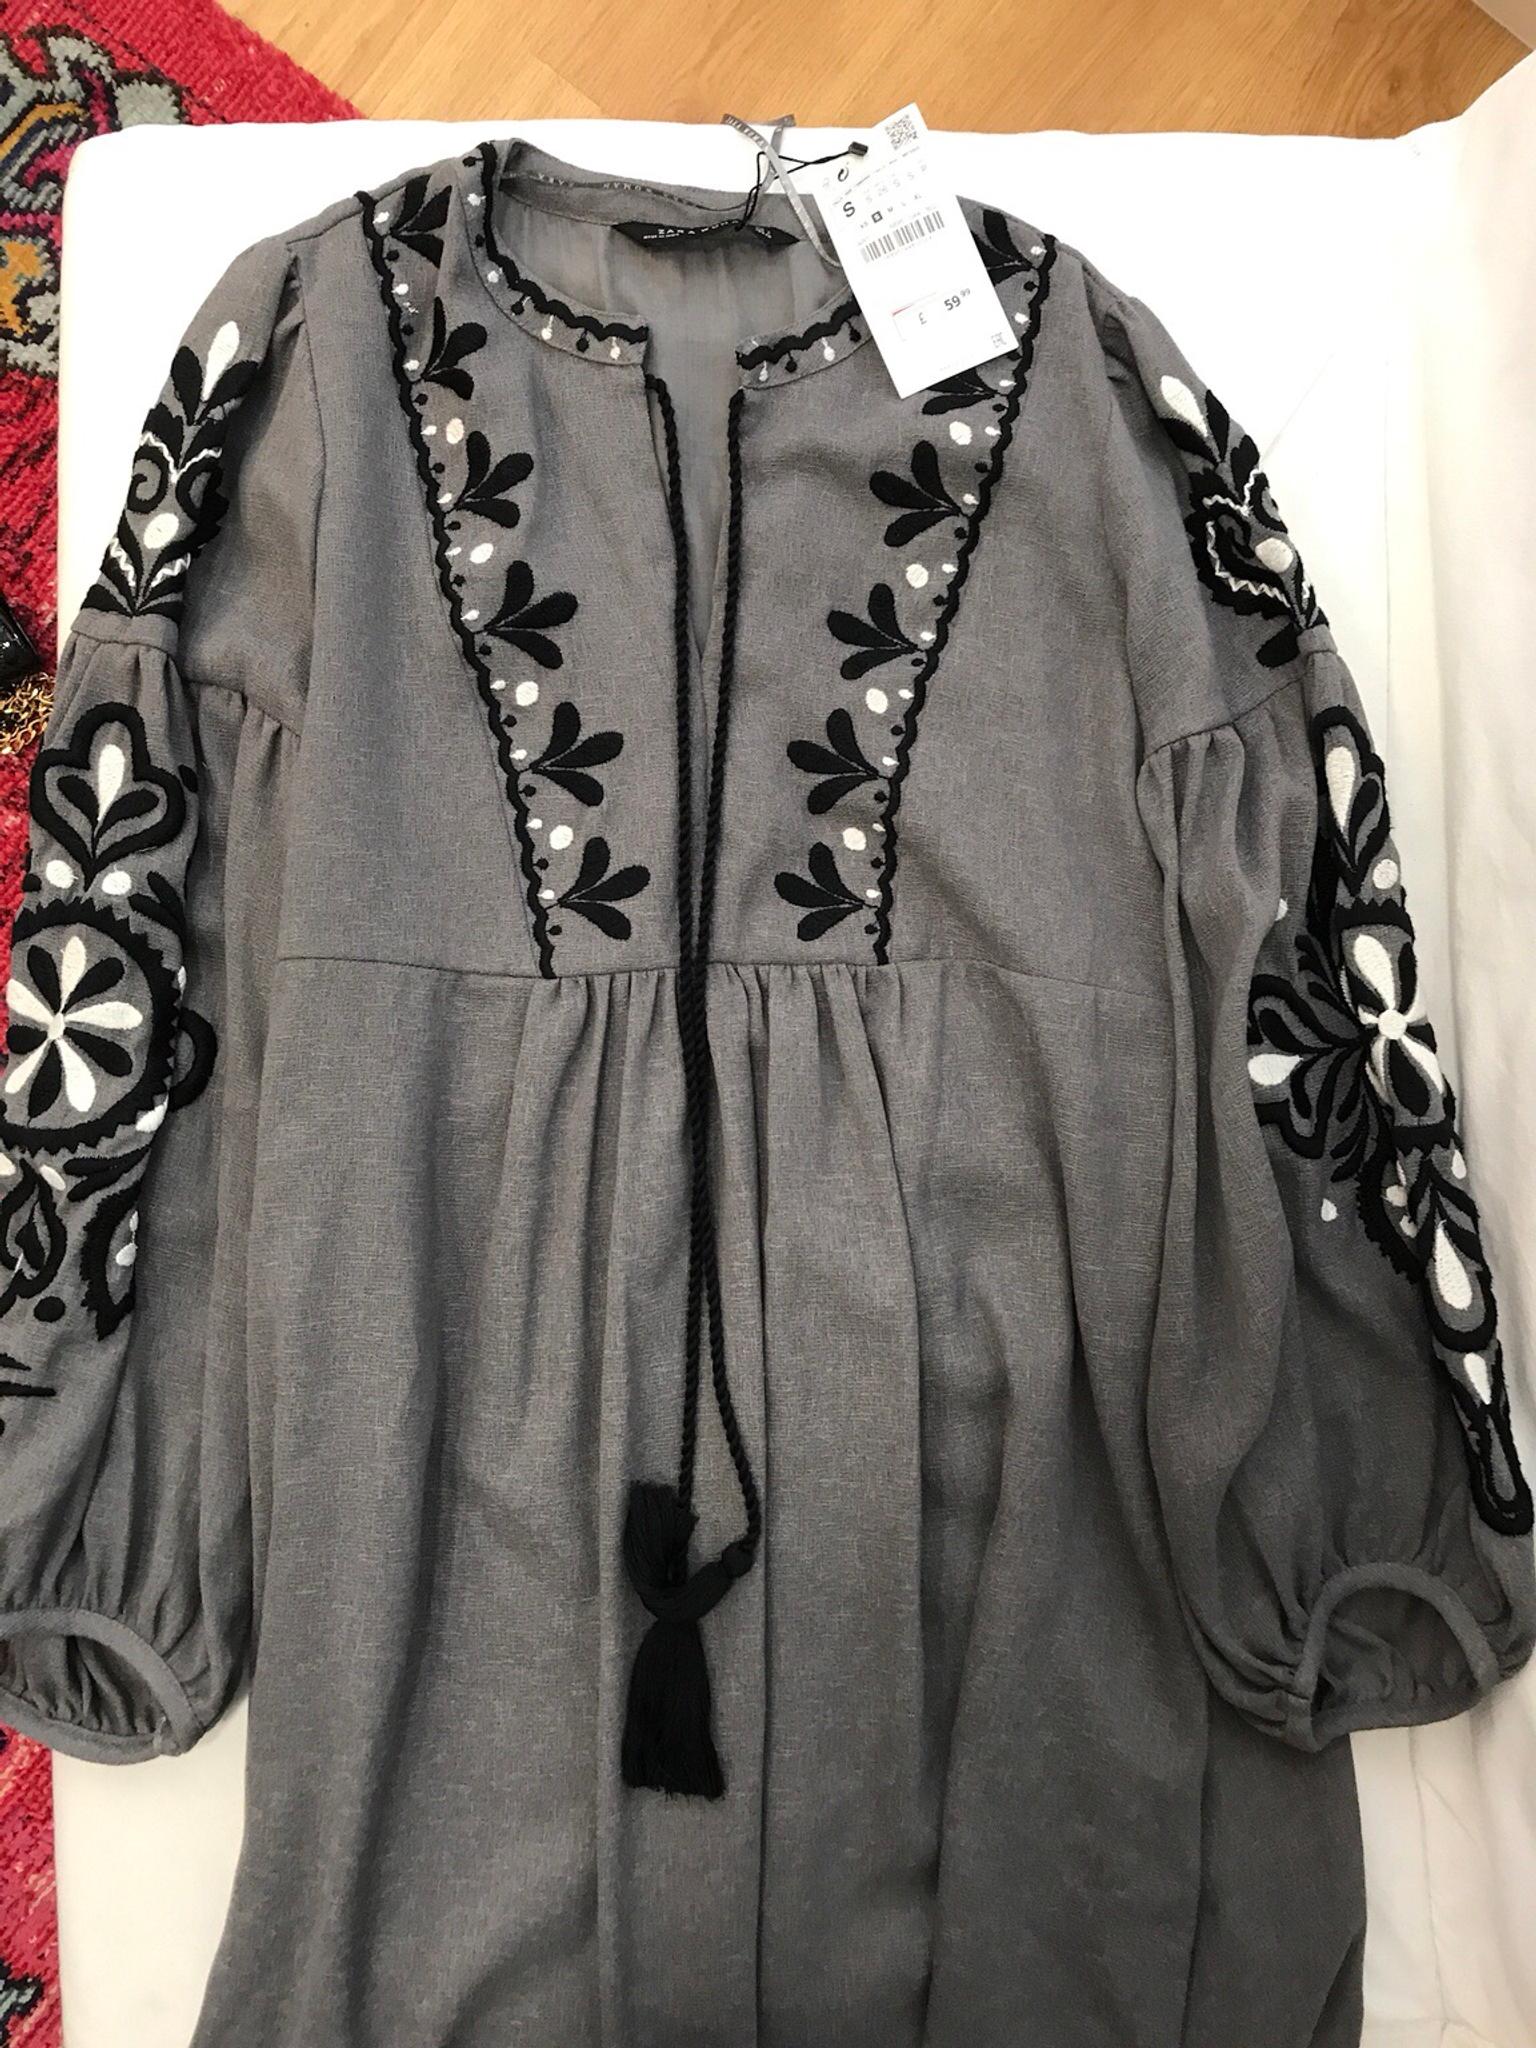 zara grey embroidered dress